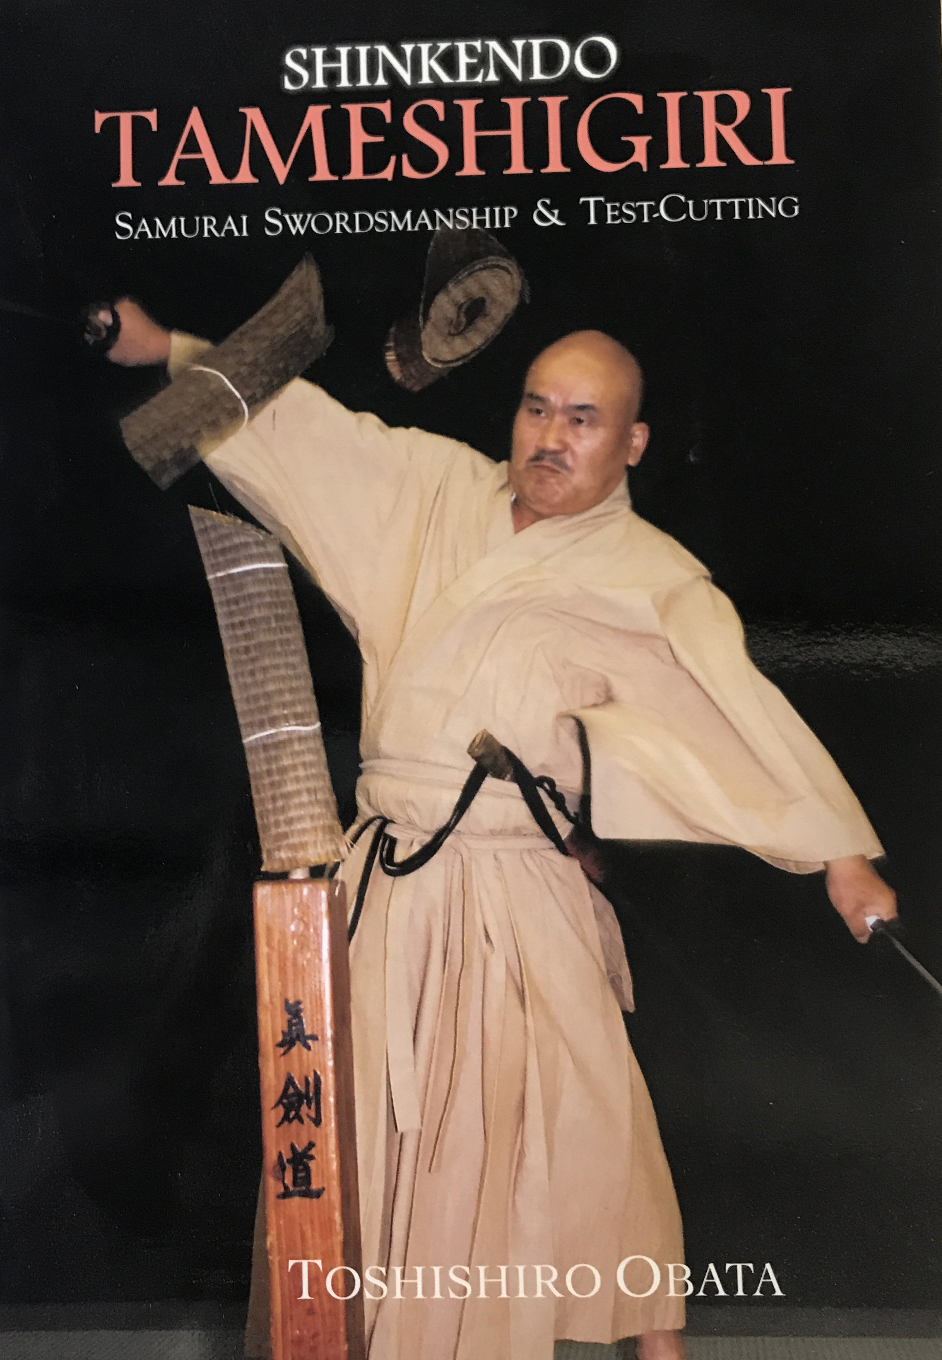 Shinkendo Tameshigiri: Samurai Swordsmanship & Test-Cutting Book by Toshishiro Obata - Budovideos Inc